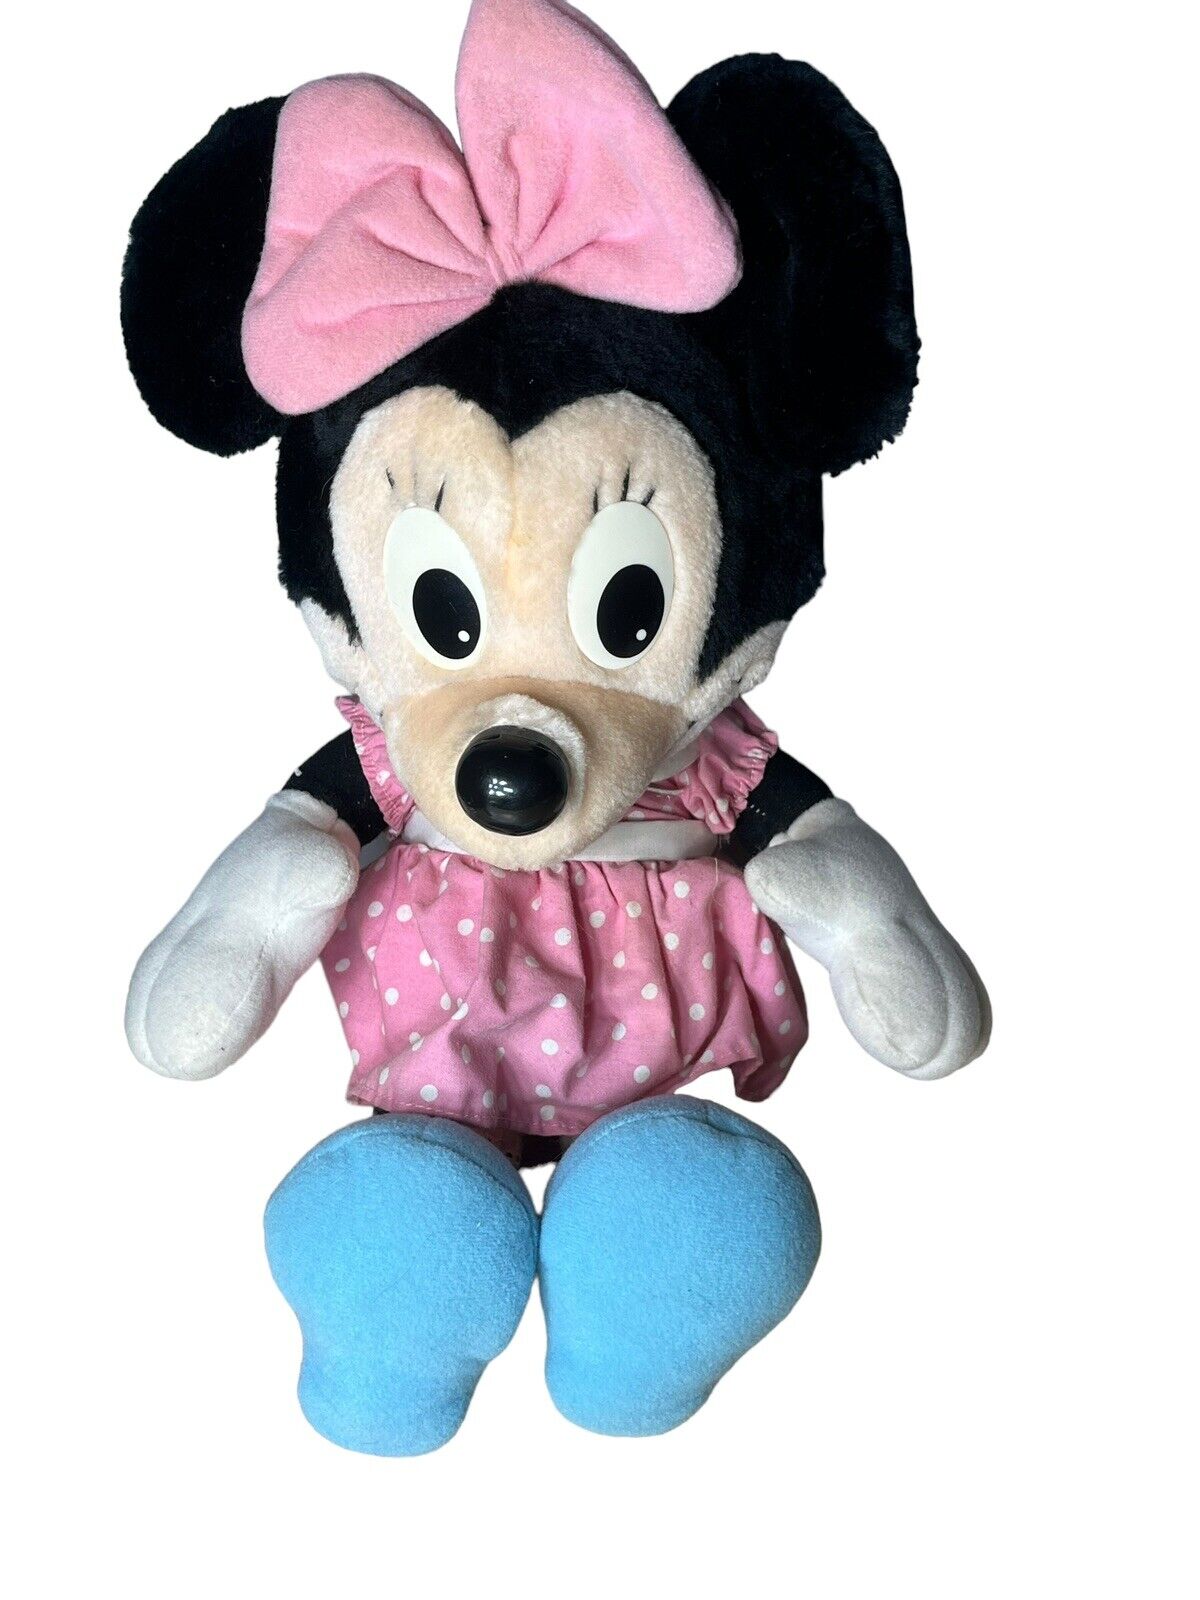 Vintage 1980’s Playskool Pink Polka Dot Minnie Mouse 14”